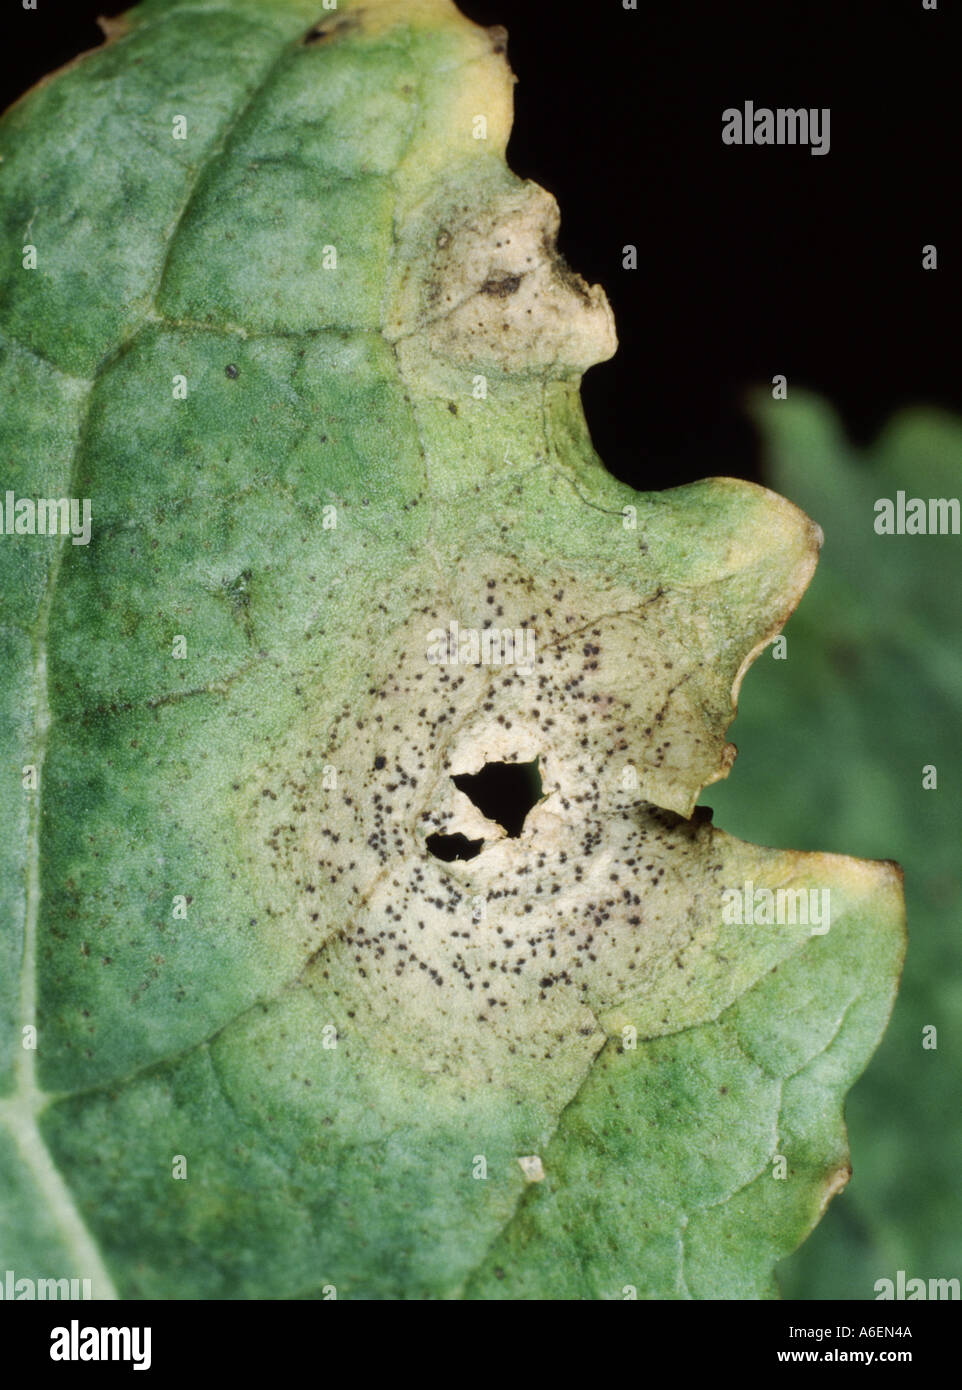 Stem canker lesion (Leptosphaeria maculans) showing pycnidia on Oilseed rape leaf Brassica napus Stock Photo